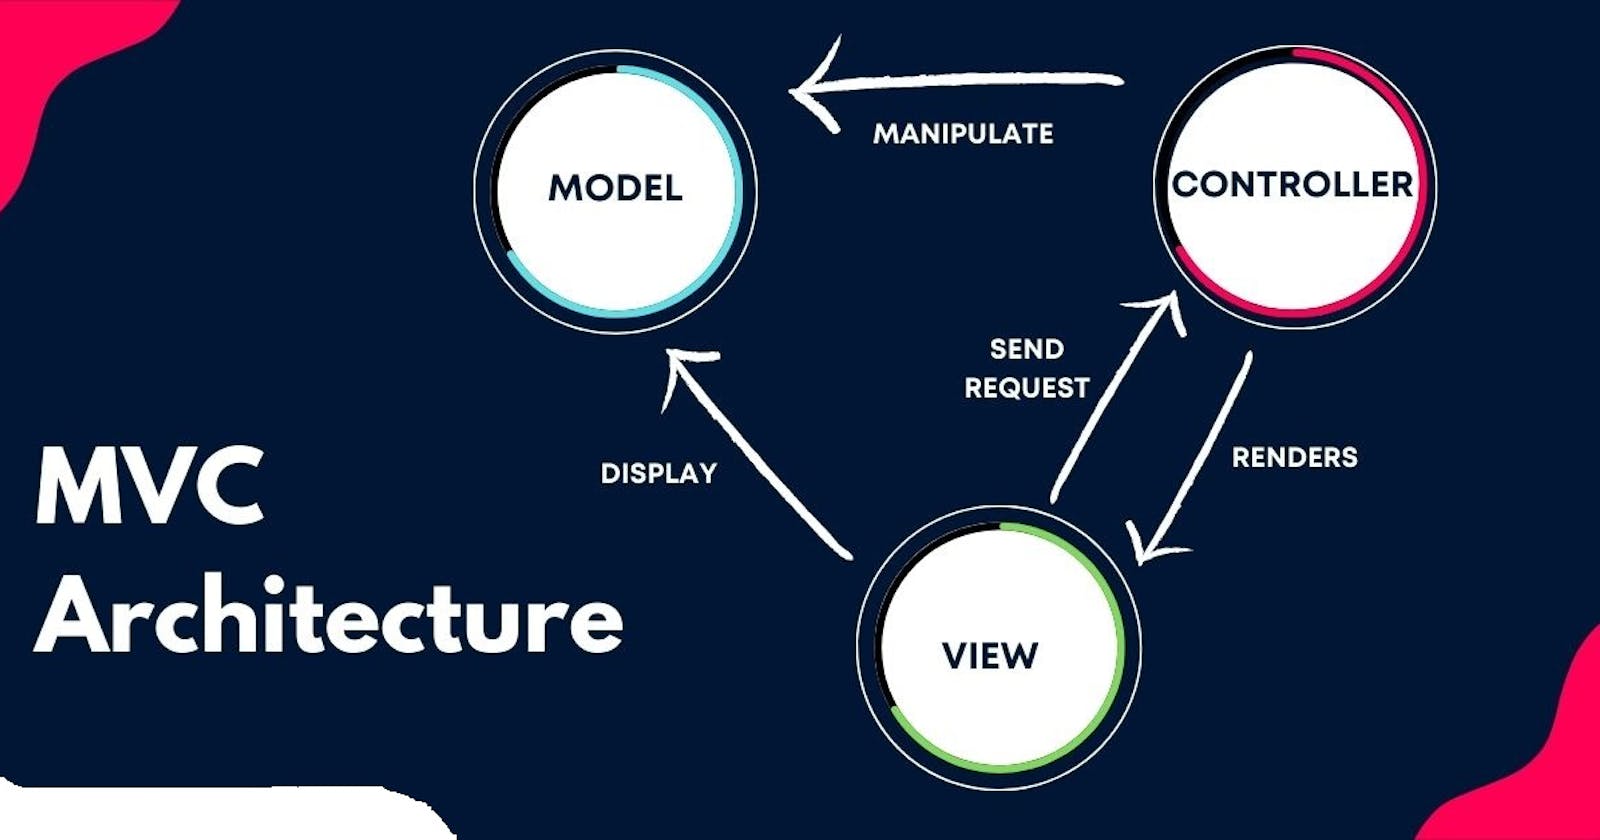 Understanding MVC (Model View 
Controller) Architecture